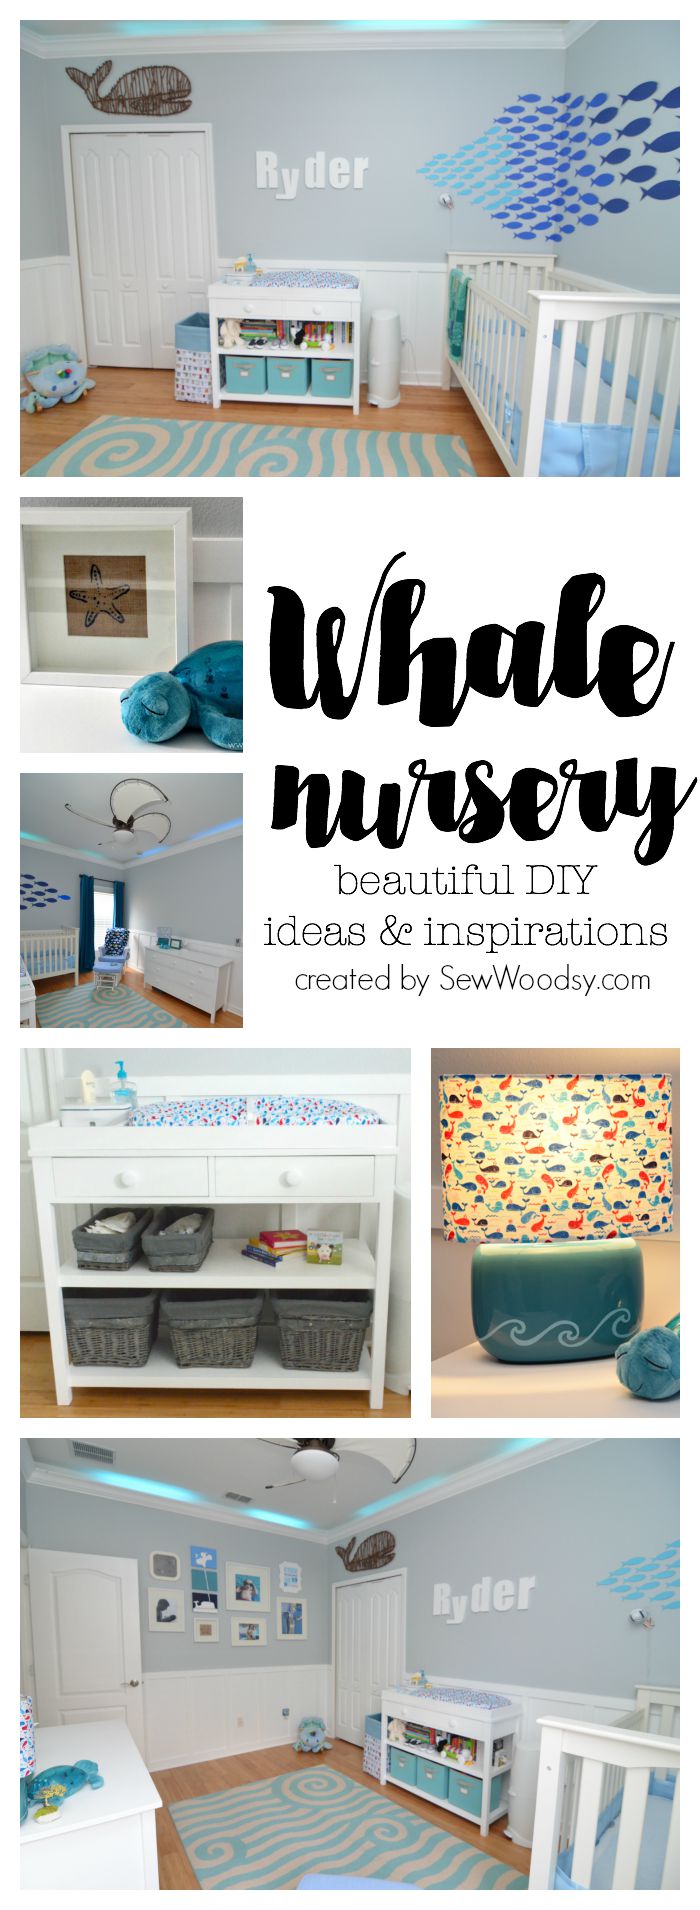 whale nursery - beautiful diy ideas and inspirations